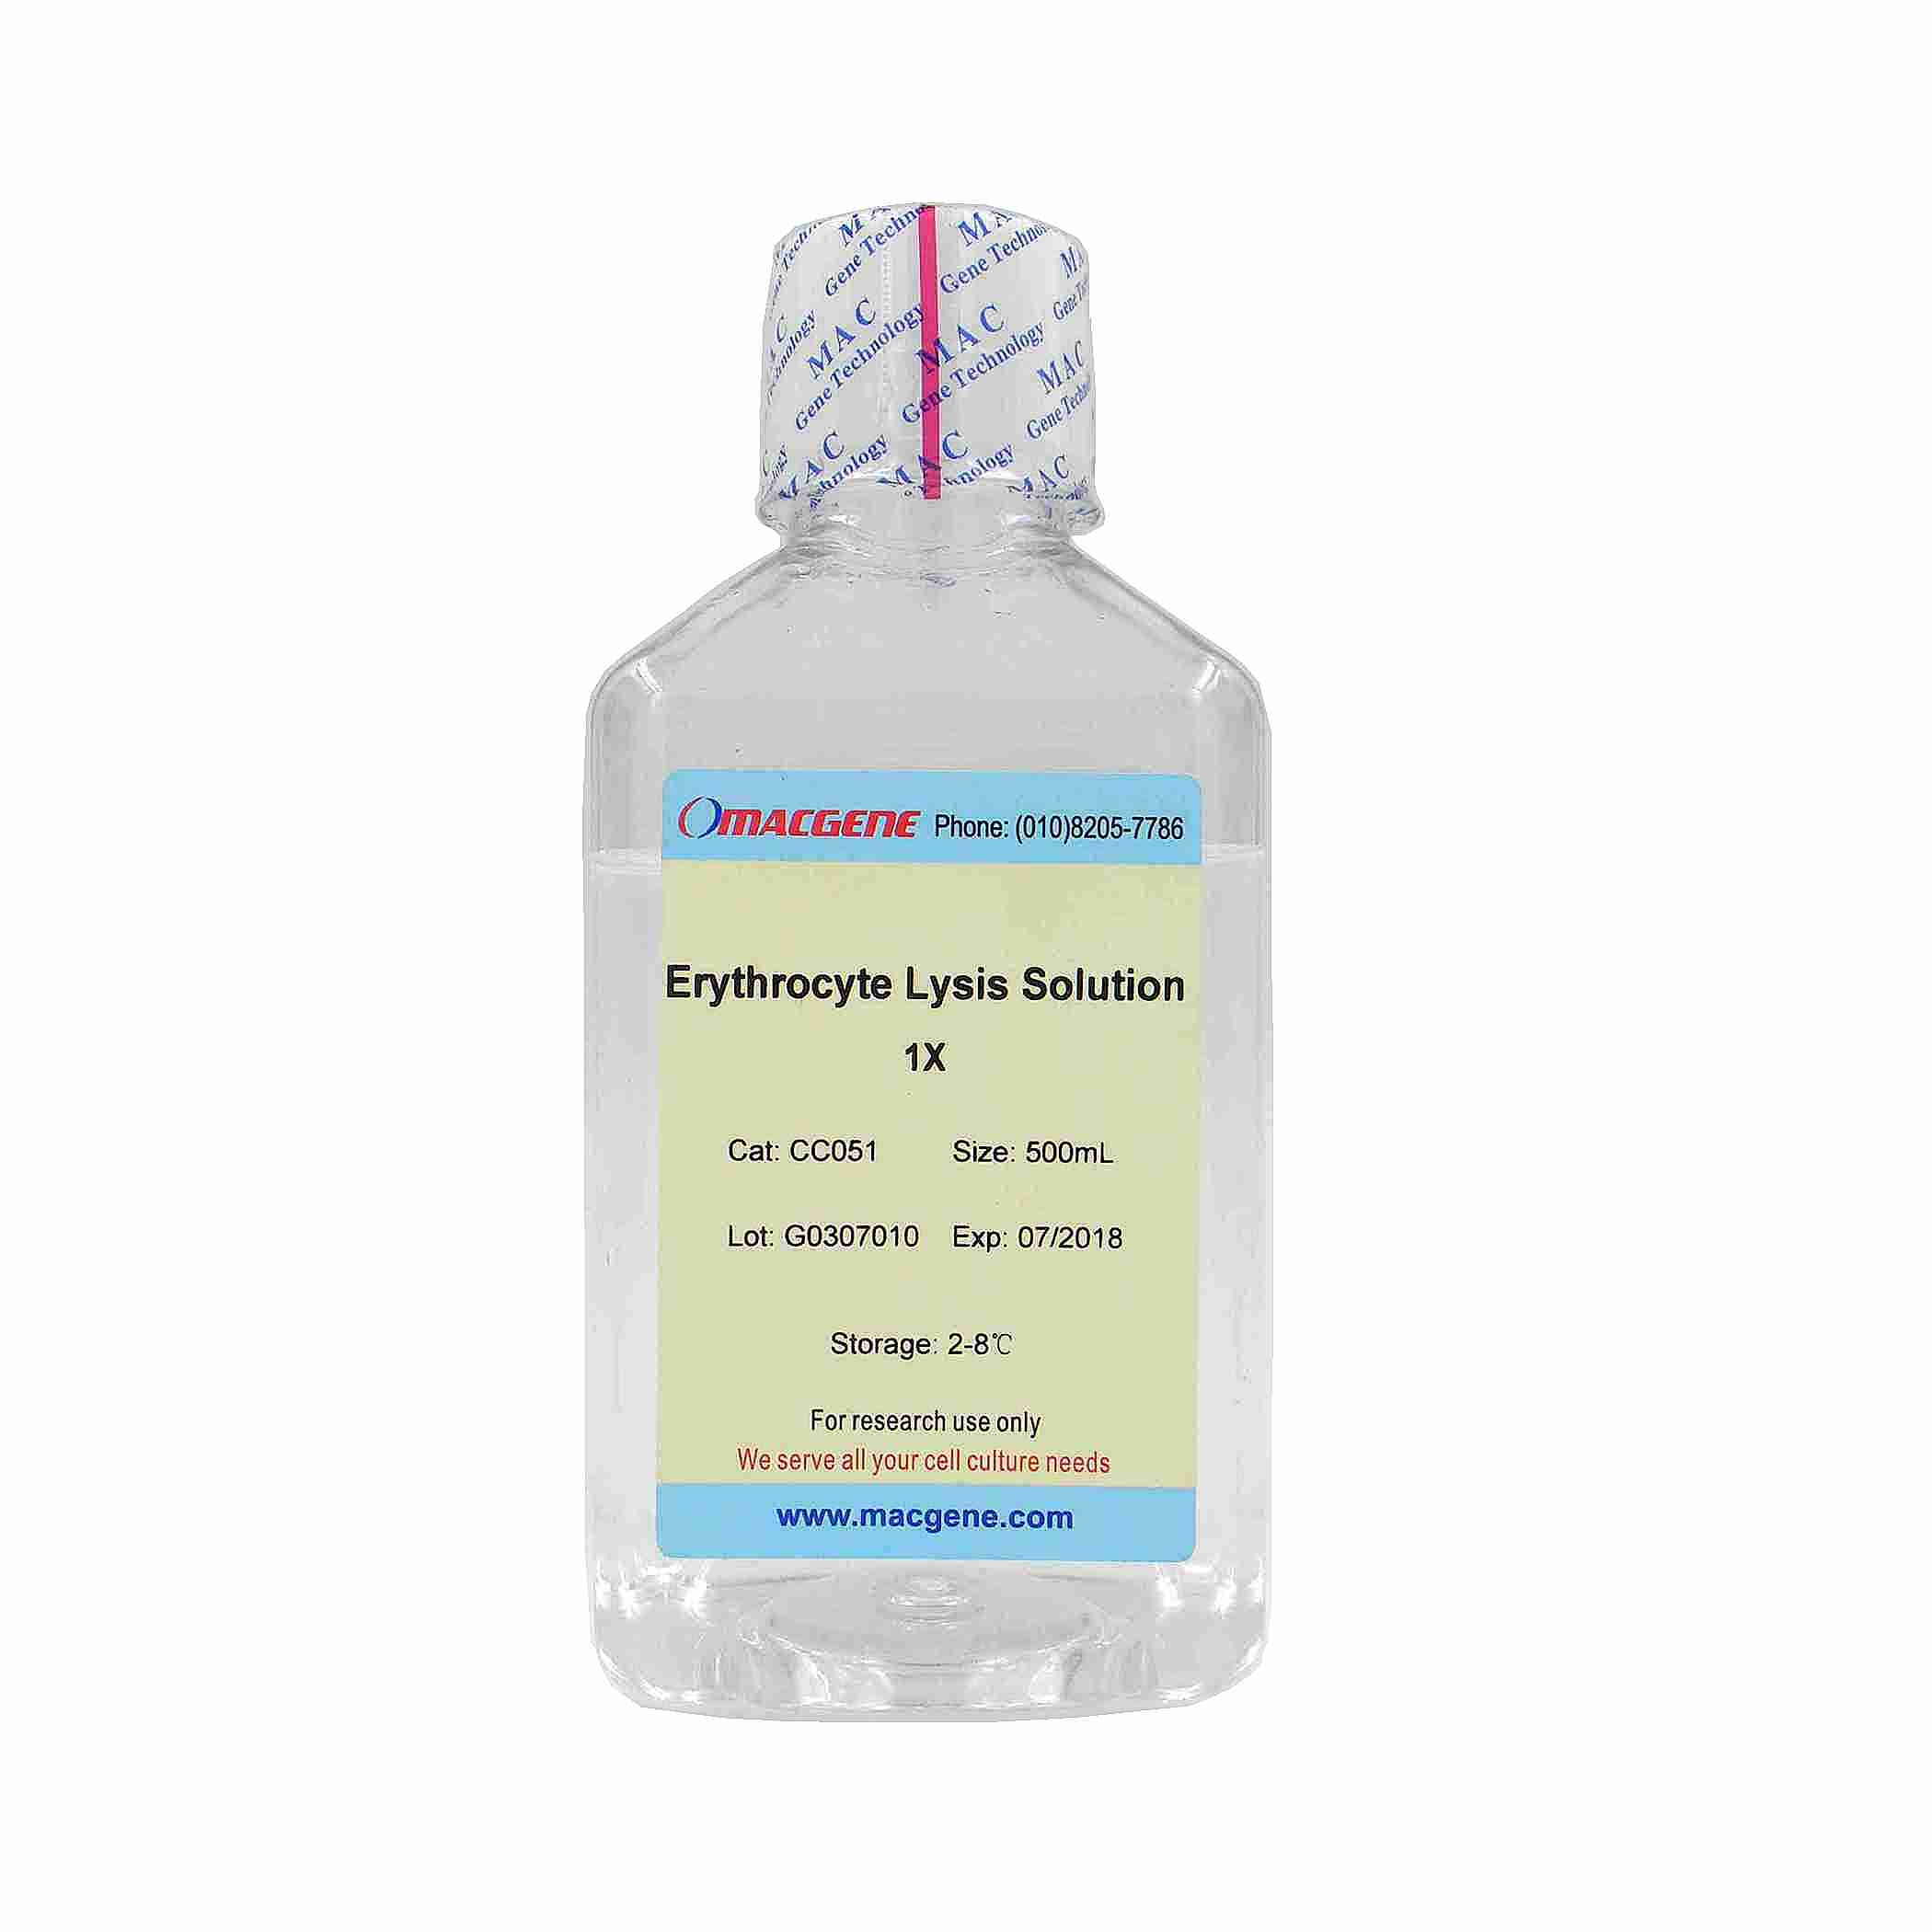 Erythrocyte Lysis Solution, 1X